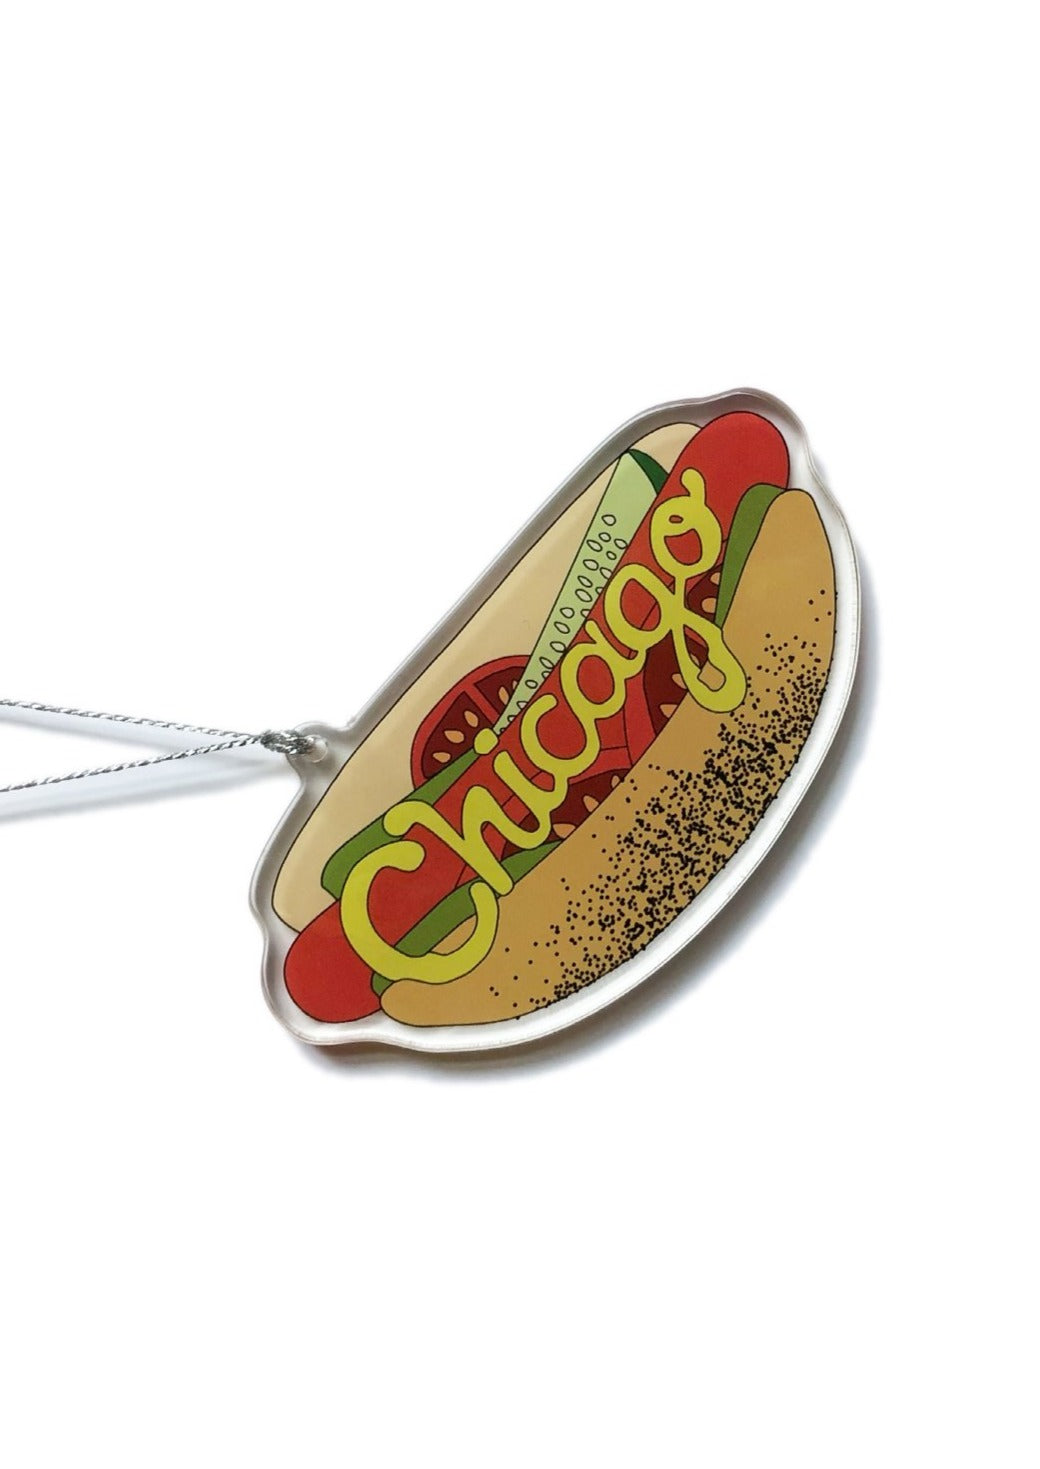 Chicago Hot Dog Keychain